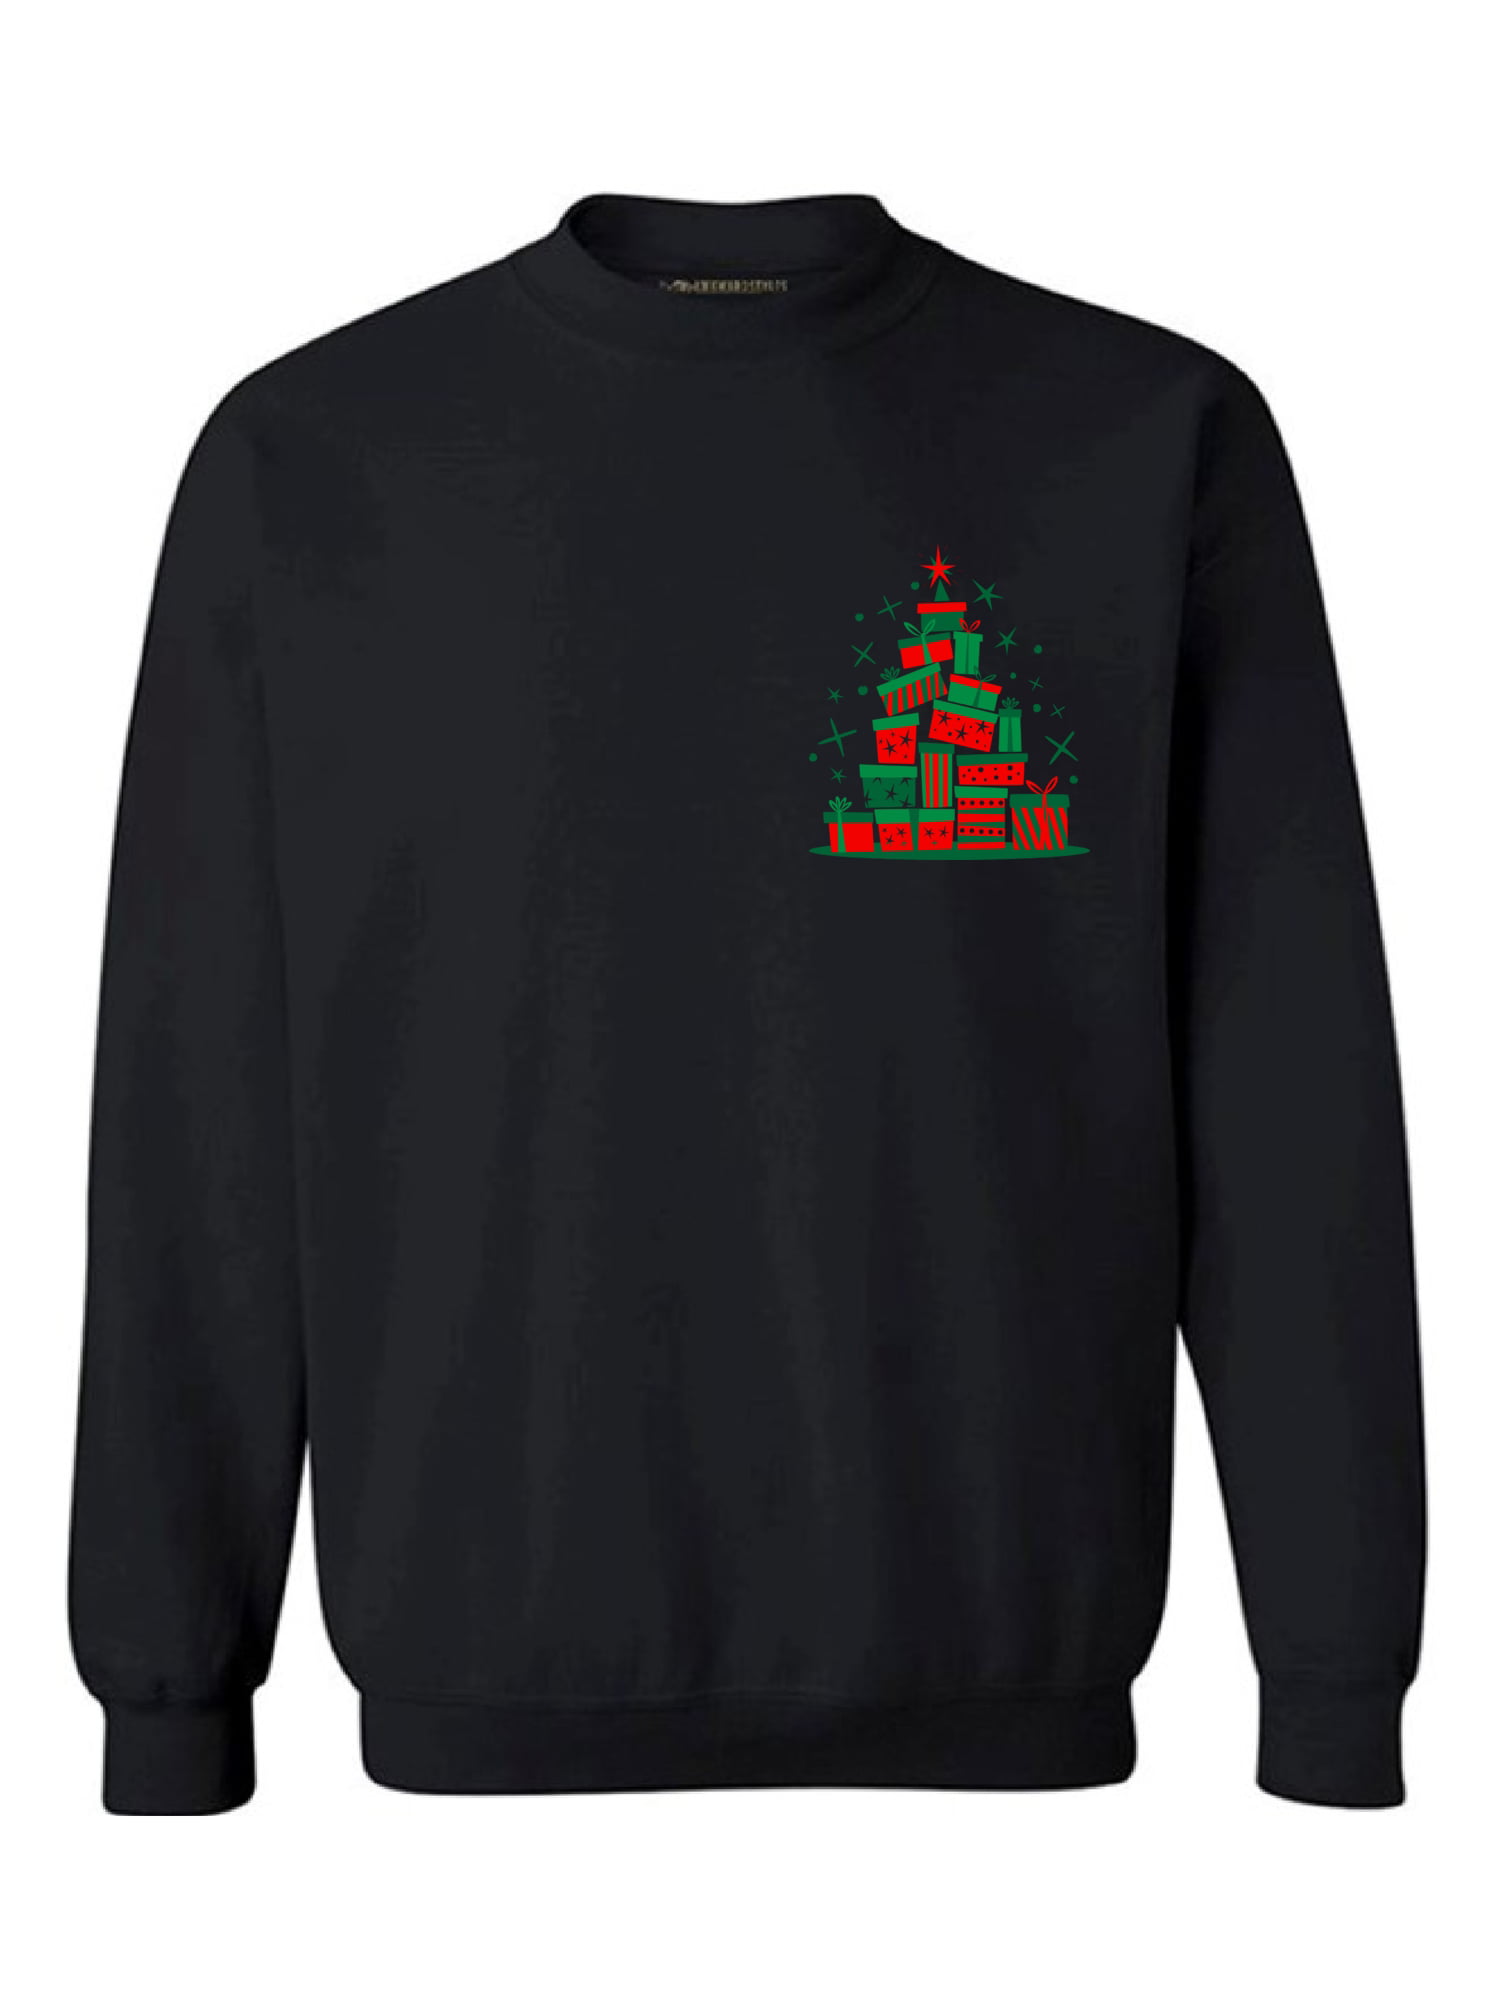 S-3XL Christmas Sweater Funny Ugly Women Men Xmas Jumper Sweatshirt Pullover Top